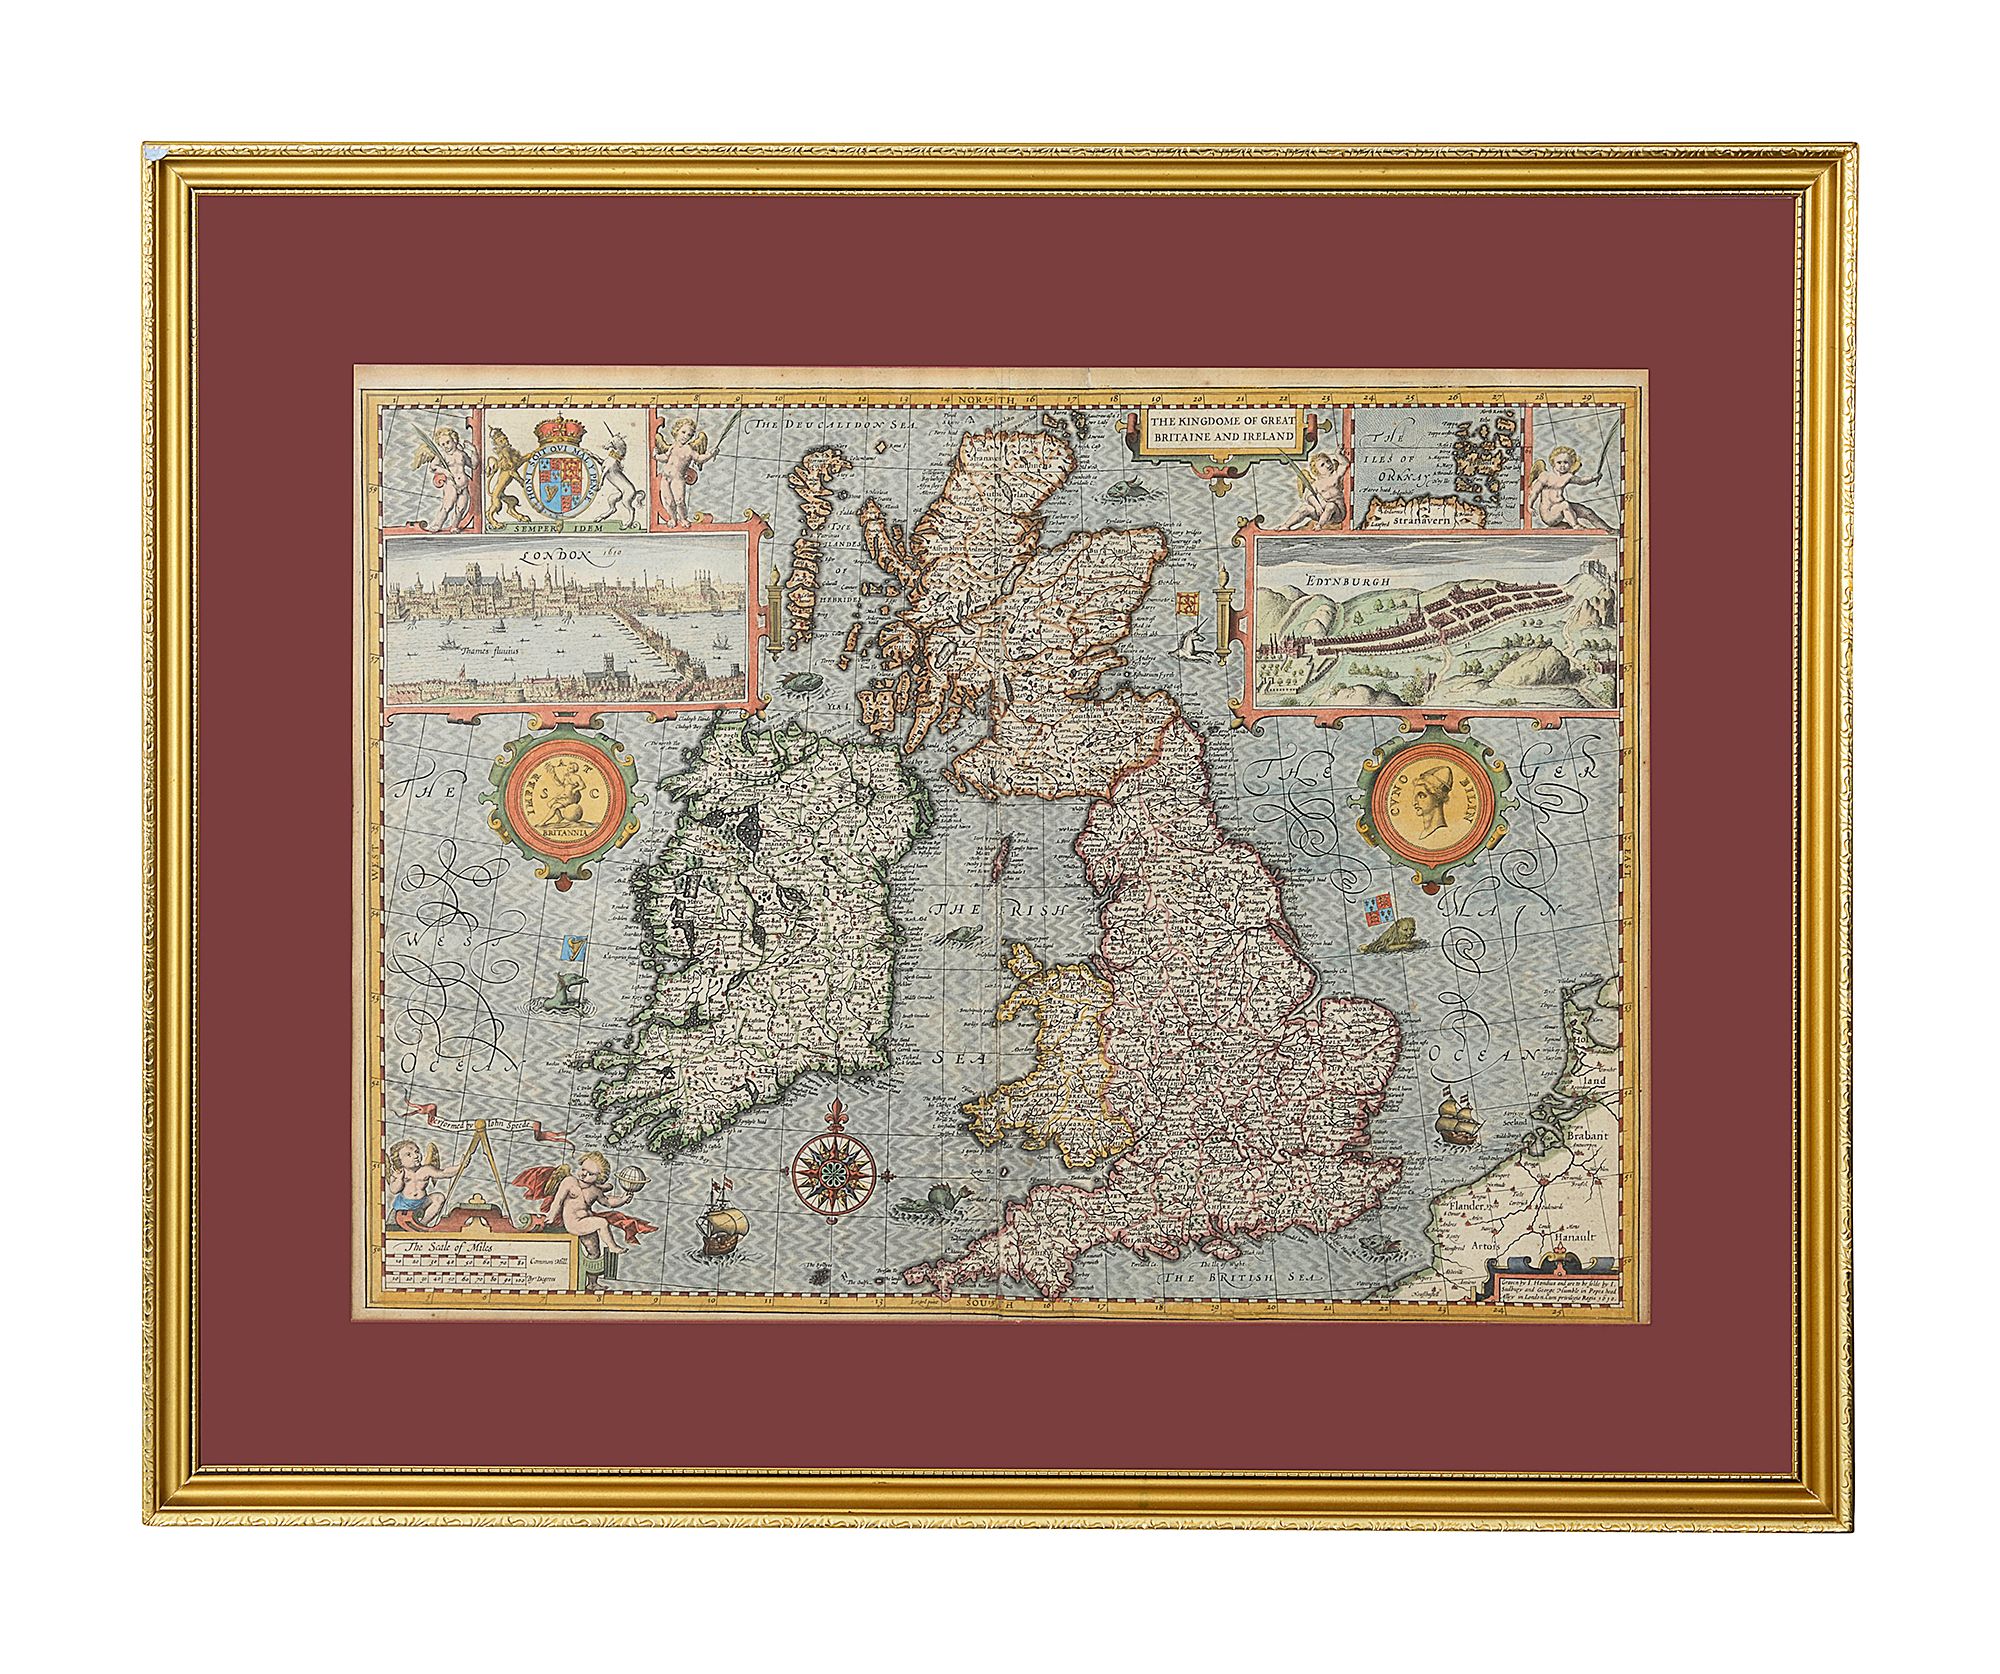 British Isles. Speed (John). The Kingdome of Great Britaine and Ireland